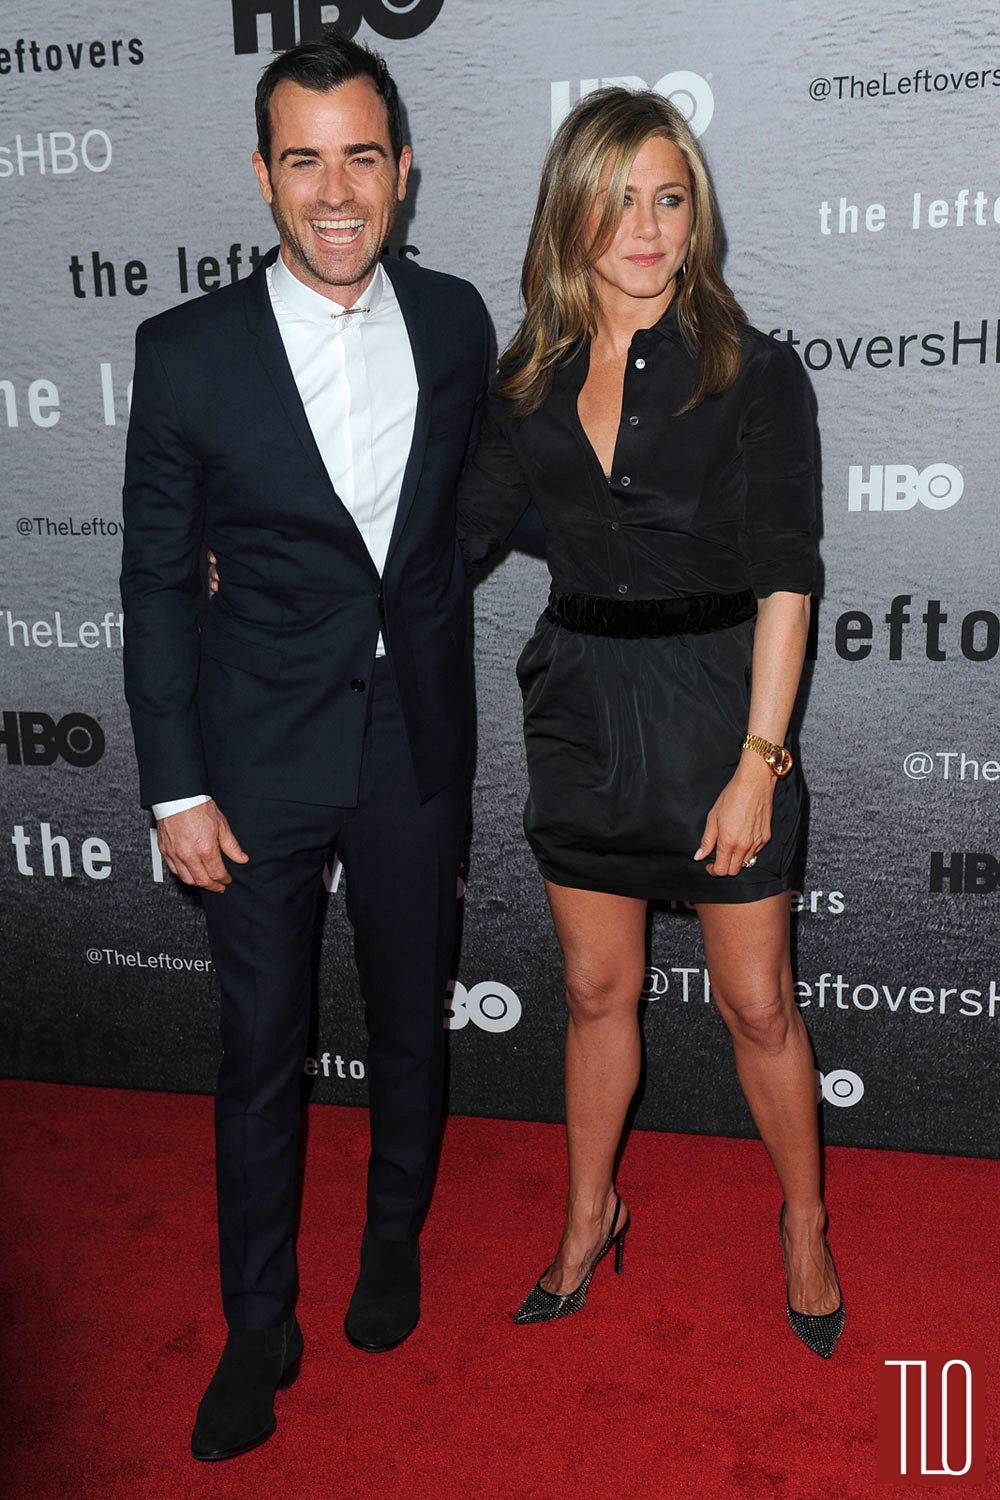 Justin-Theroux-Jennifer-Aniston-The-Leftovers-TV-Show-Premiere-Tom-Lorenzo-Site-TLO (1)